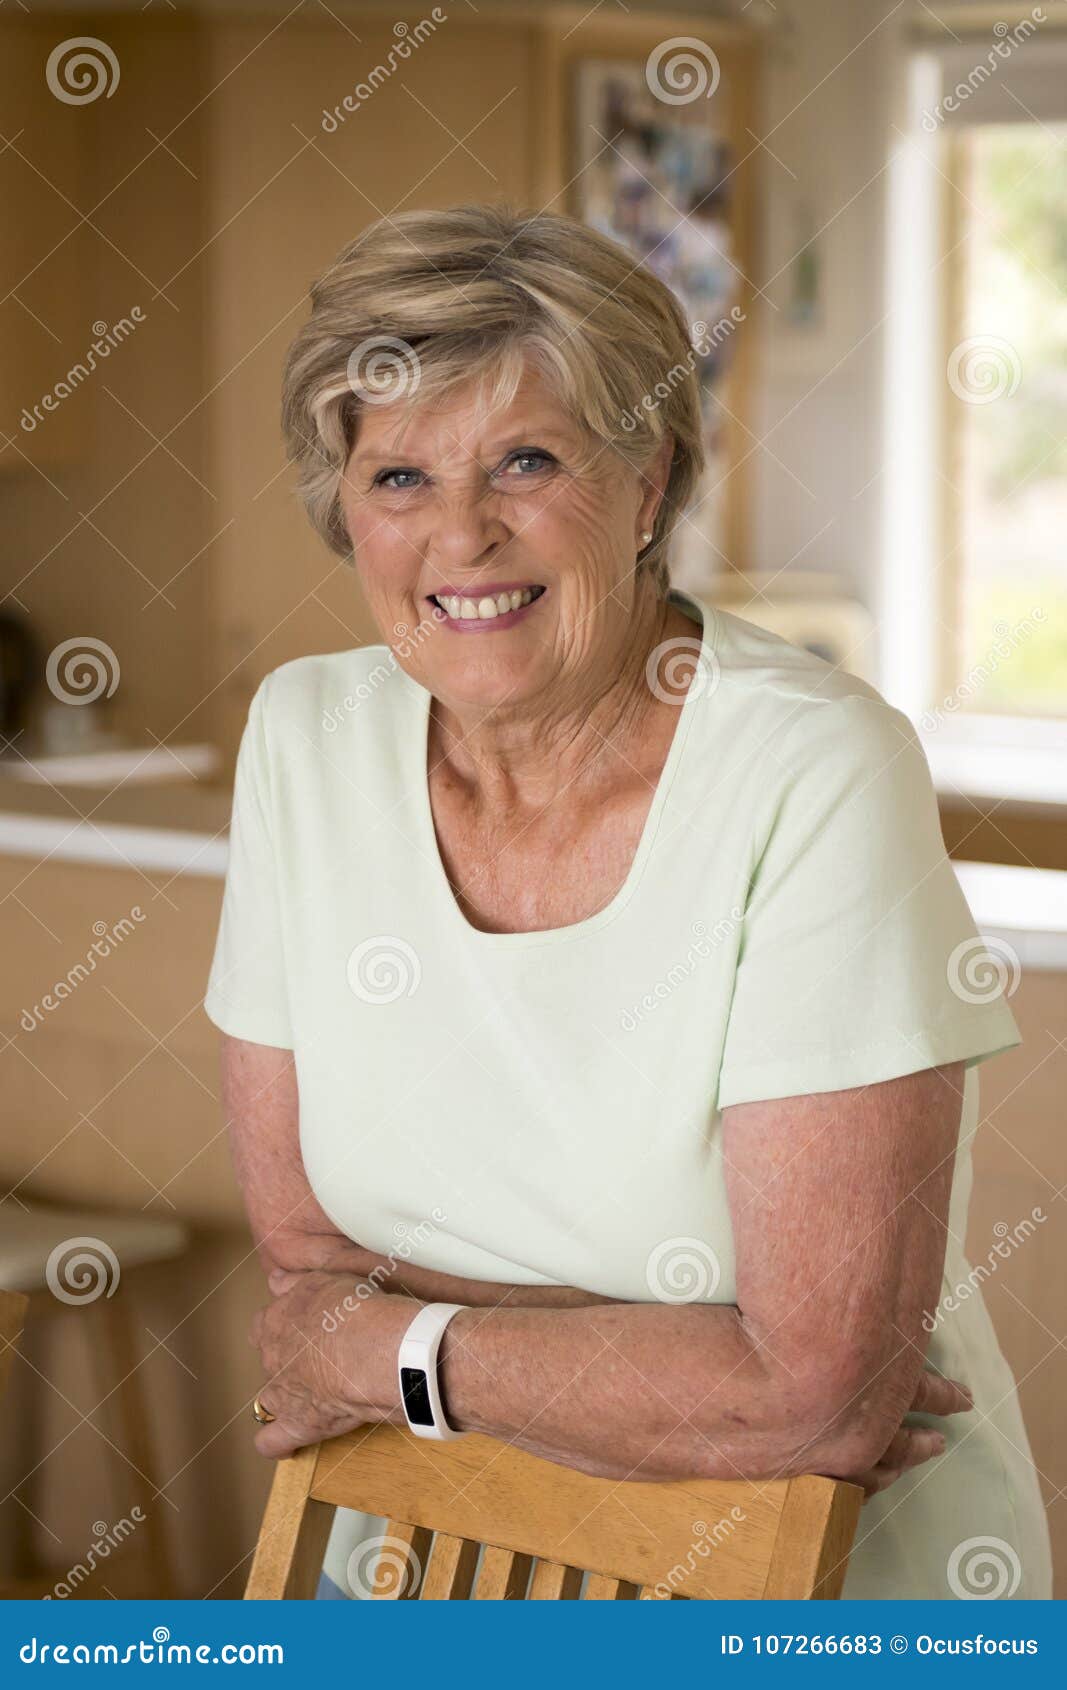 older mature woman selfies